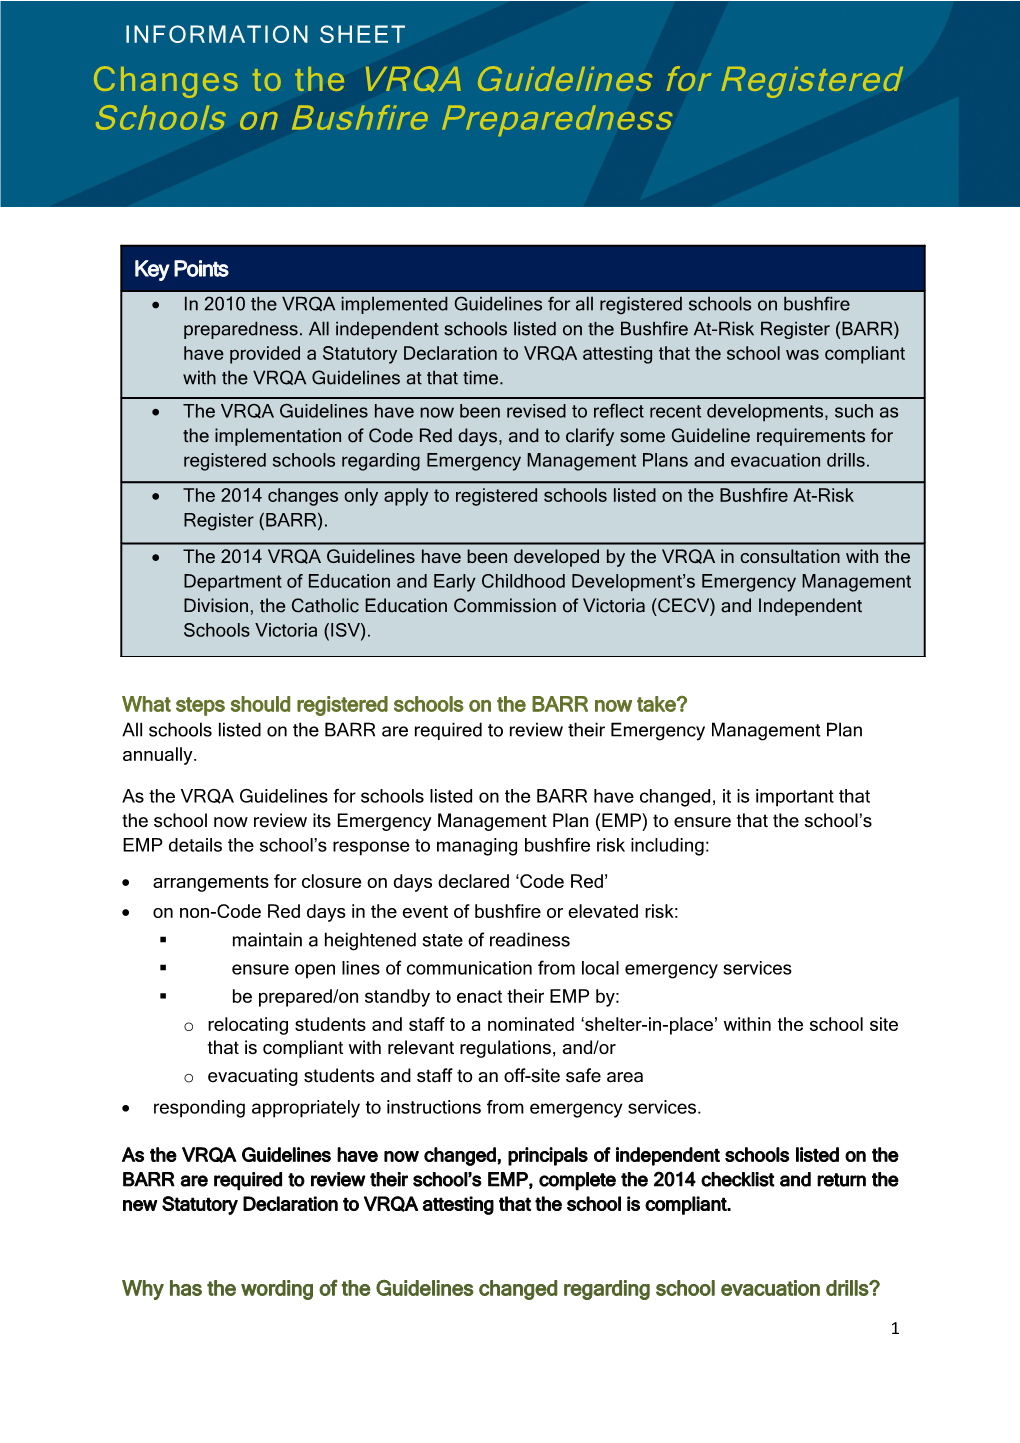 Changes to the VRQA Guidelines for Registered Schools on Bushfire Preparedness